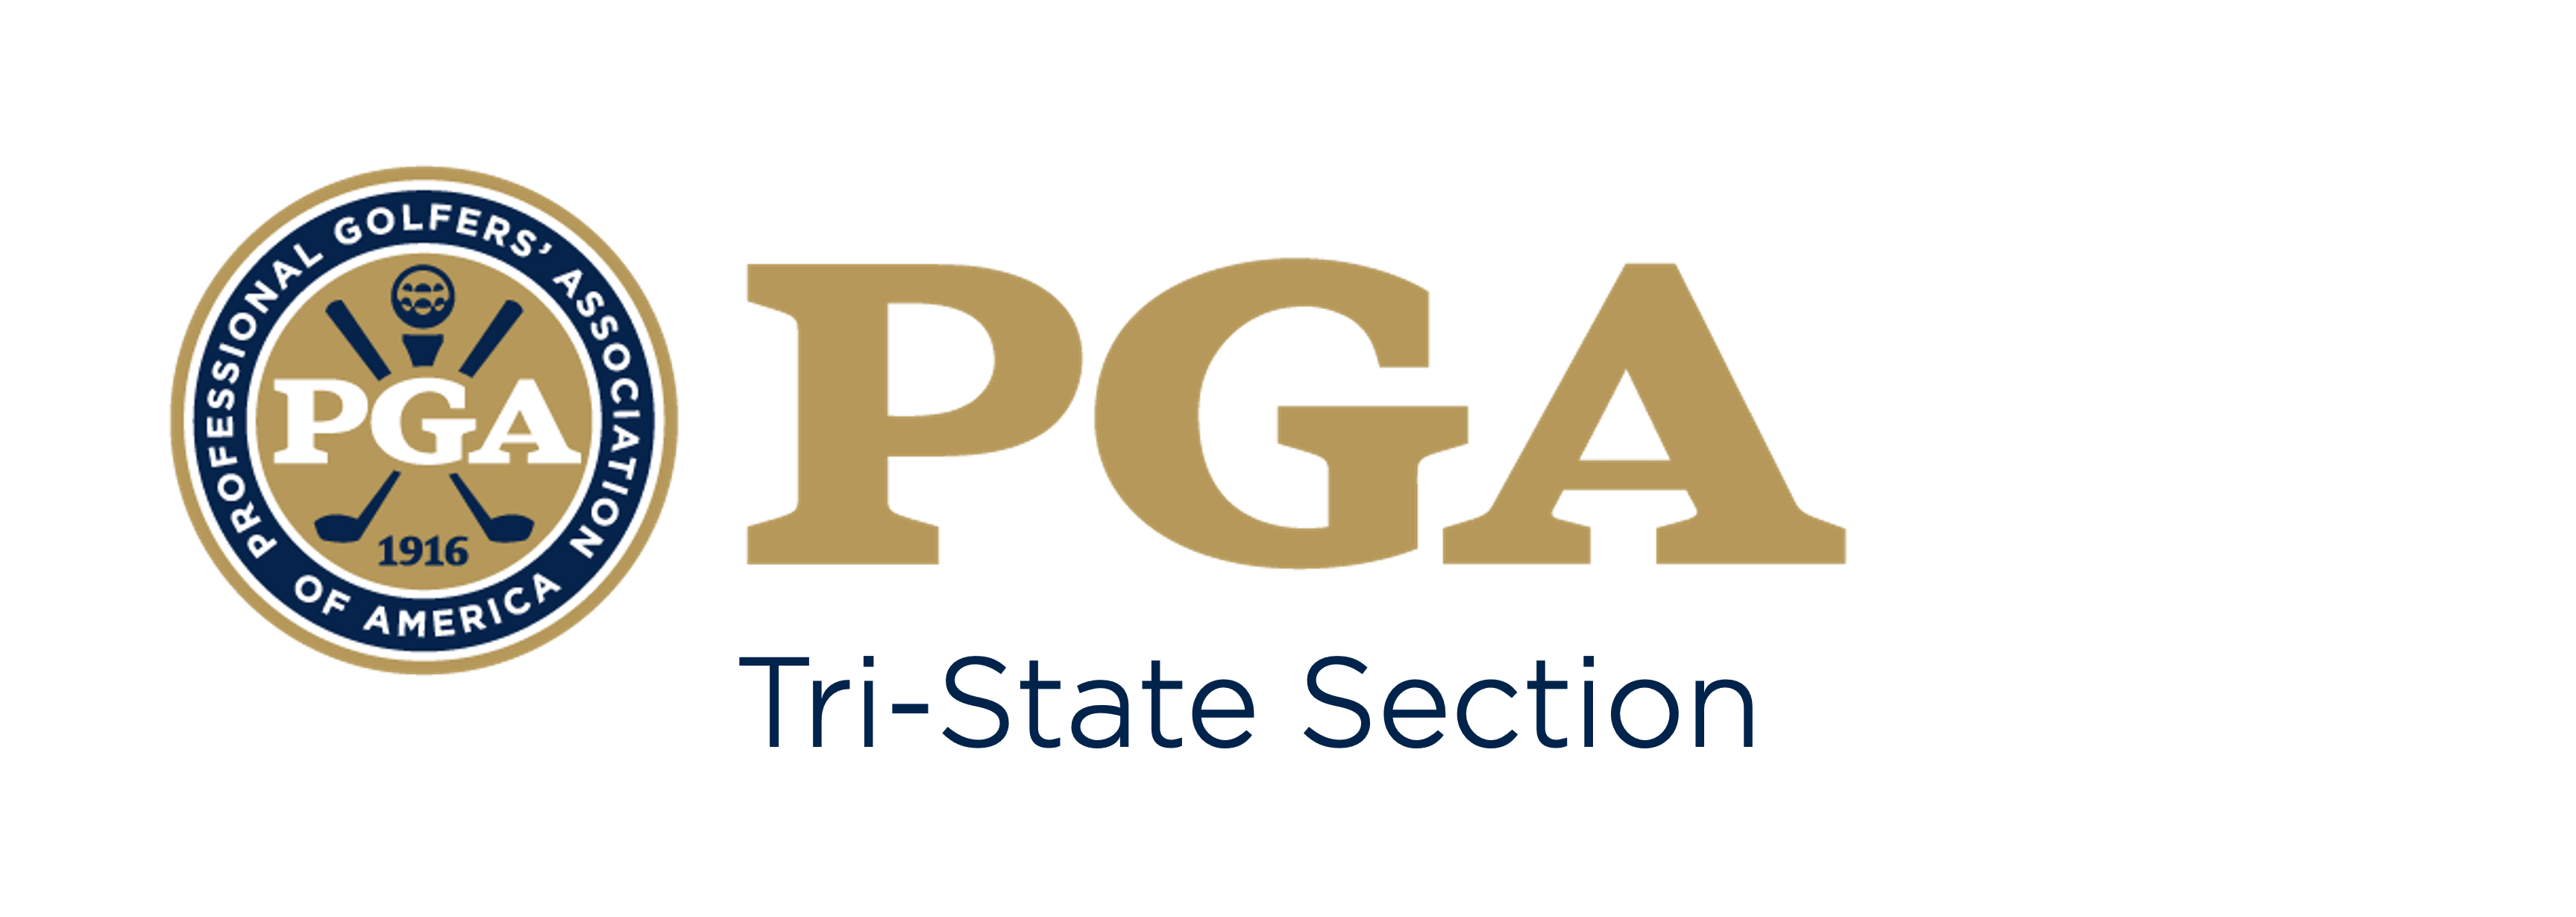 Tri-State PGA Hole In One Program